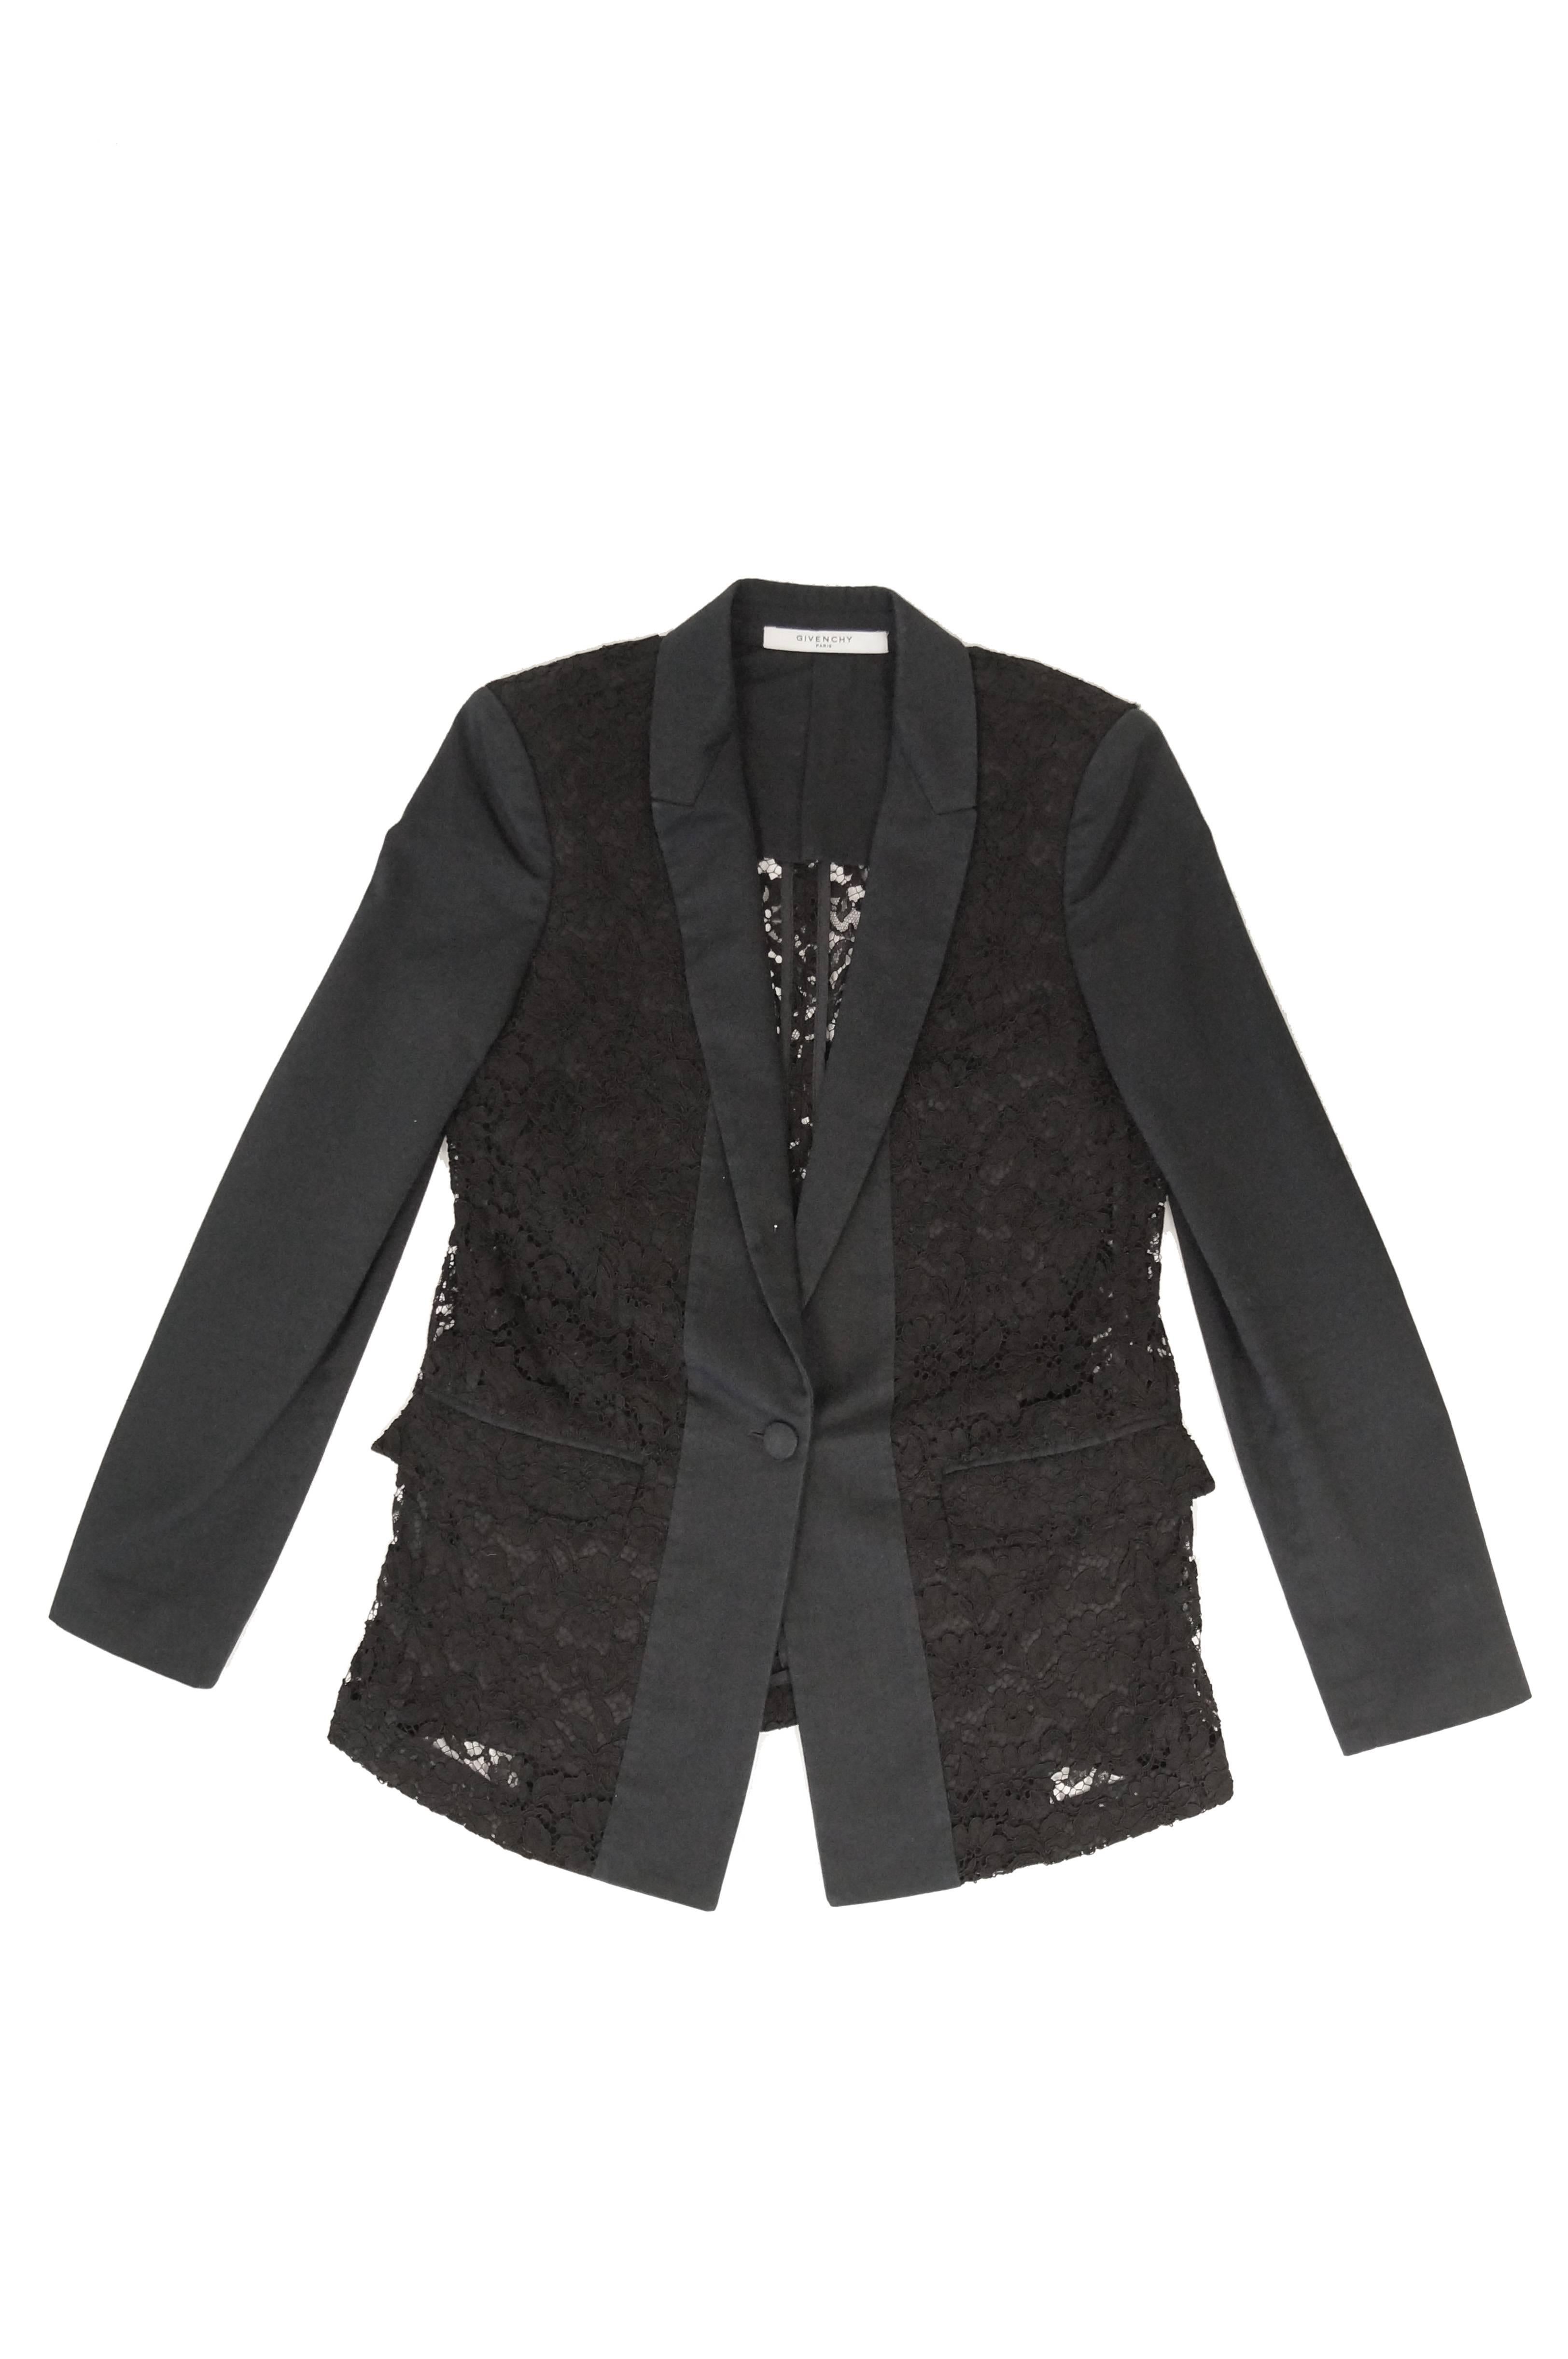 Givenchy Black Floral Lace Back Panel Blazer For Sale 5